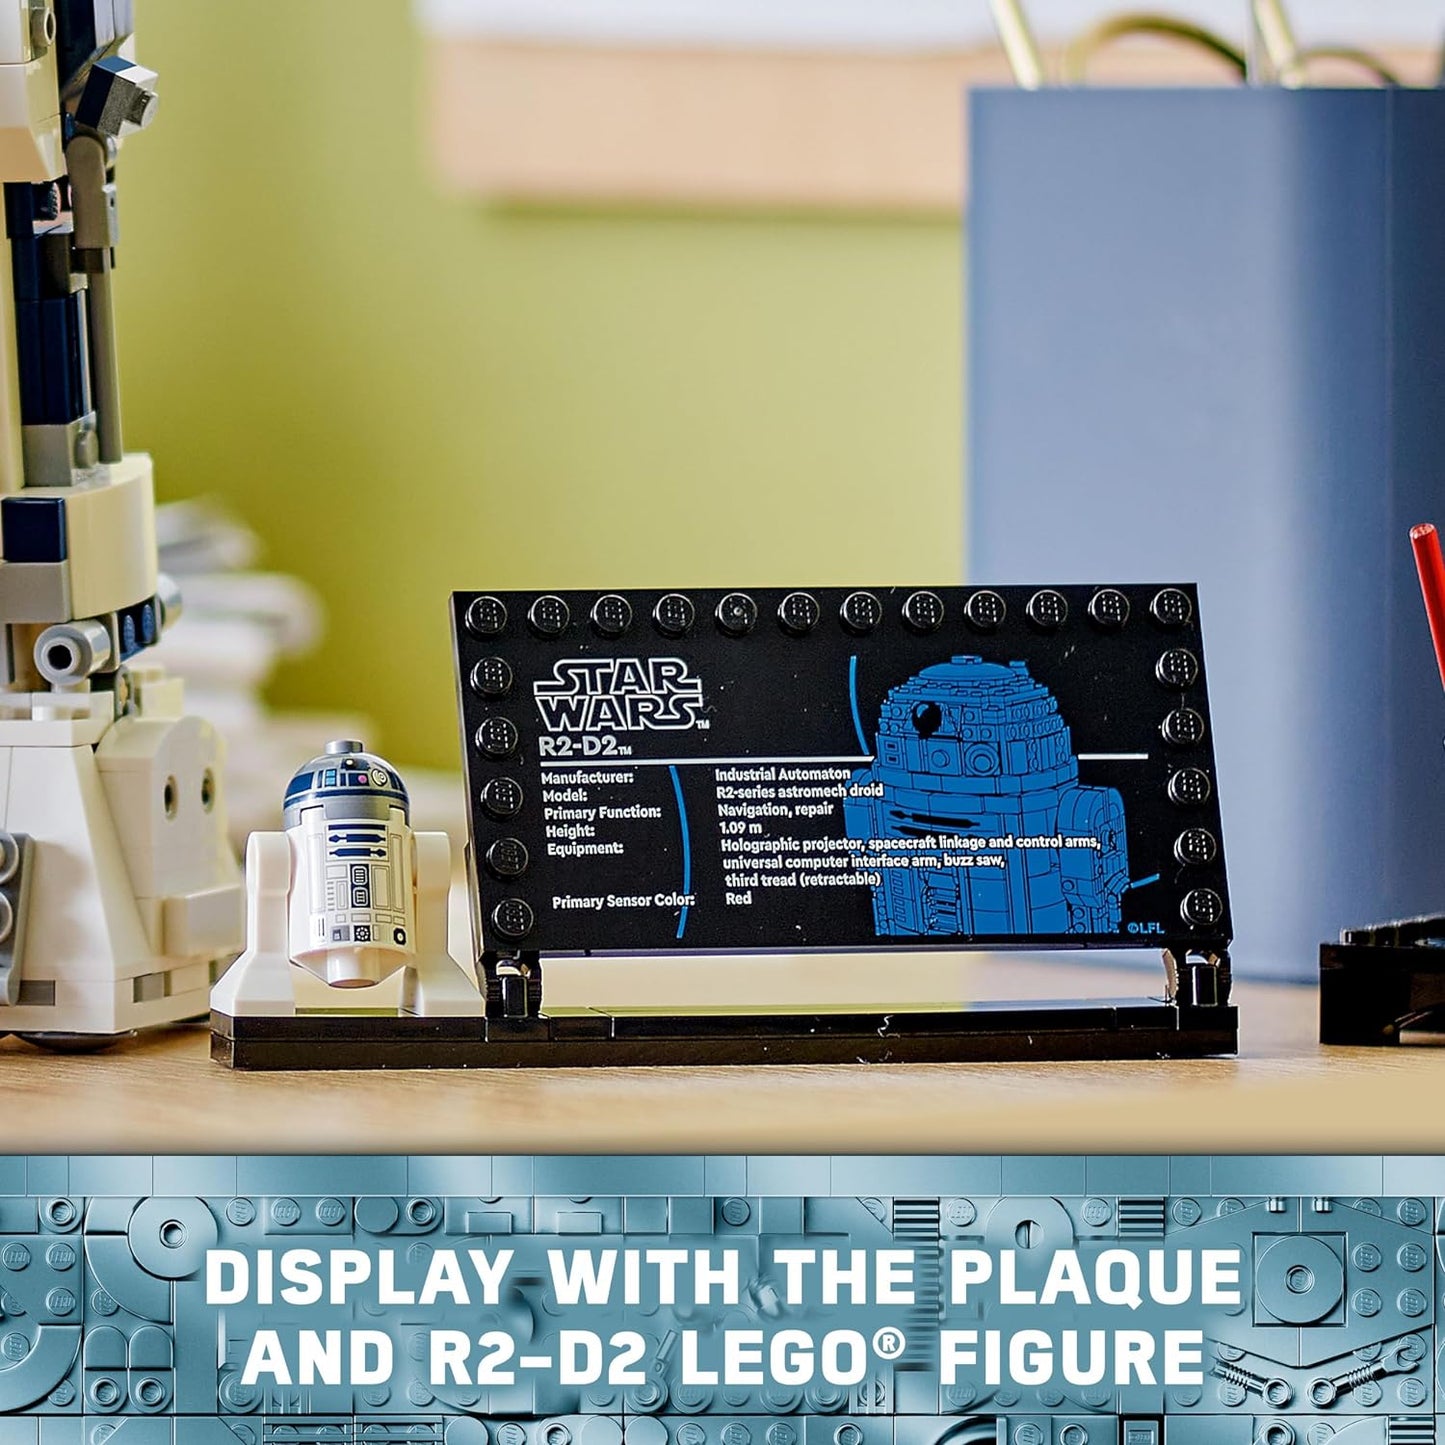 Lego Star Wars R2-D2, Droid Stones Set 75379